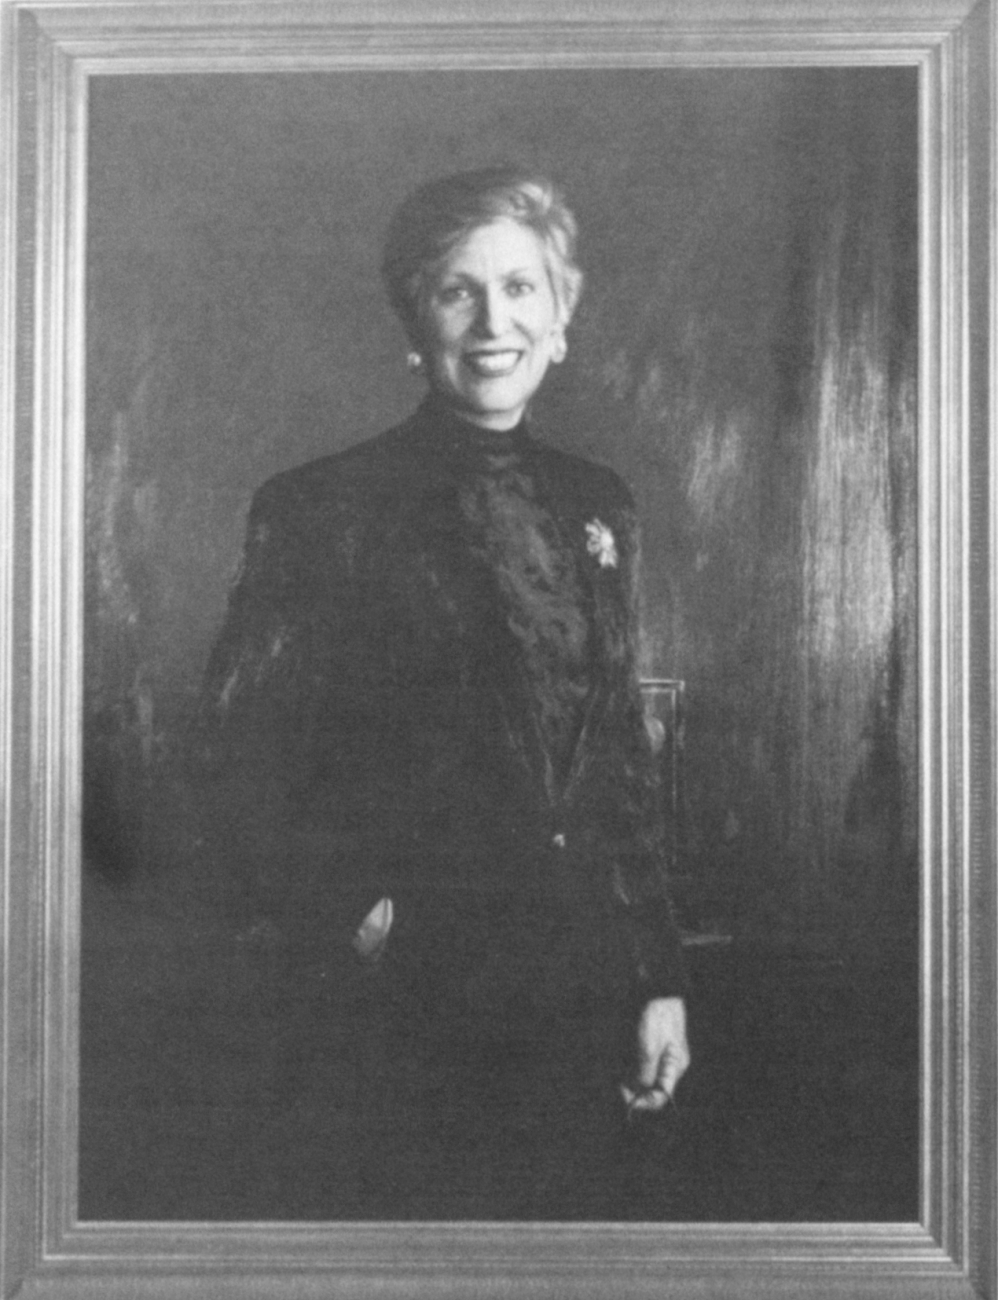 Barbara Hackman Franklin, 1940- , twenty-ninth Secretary of Commerce